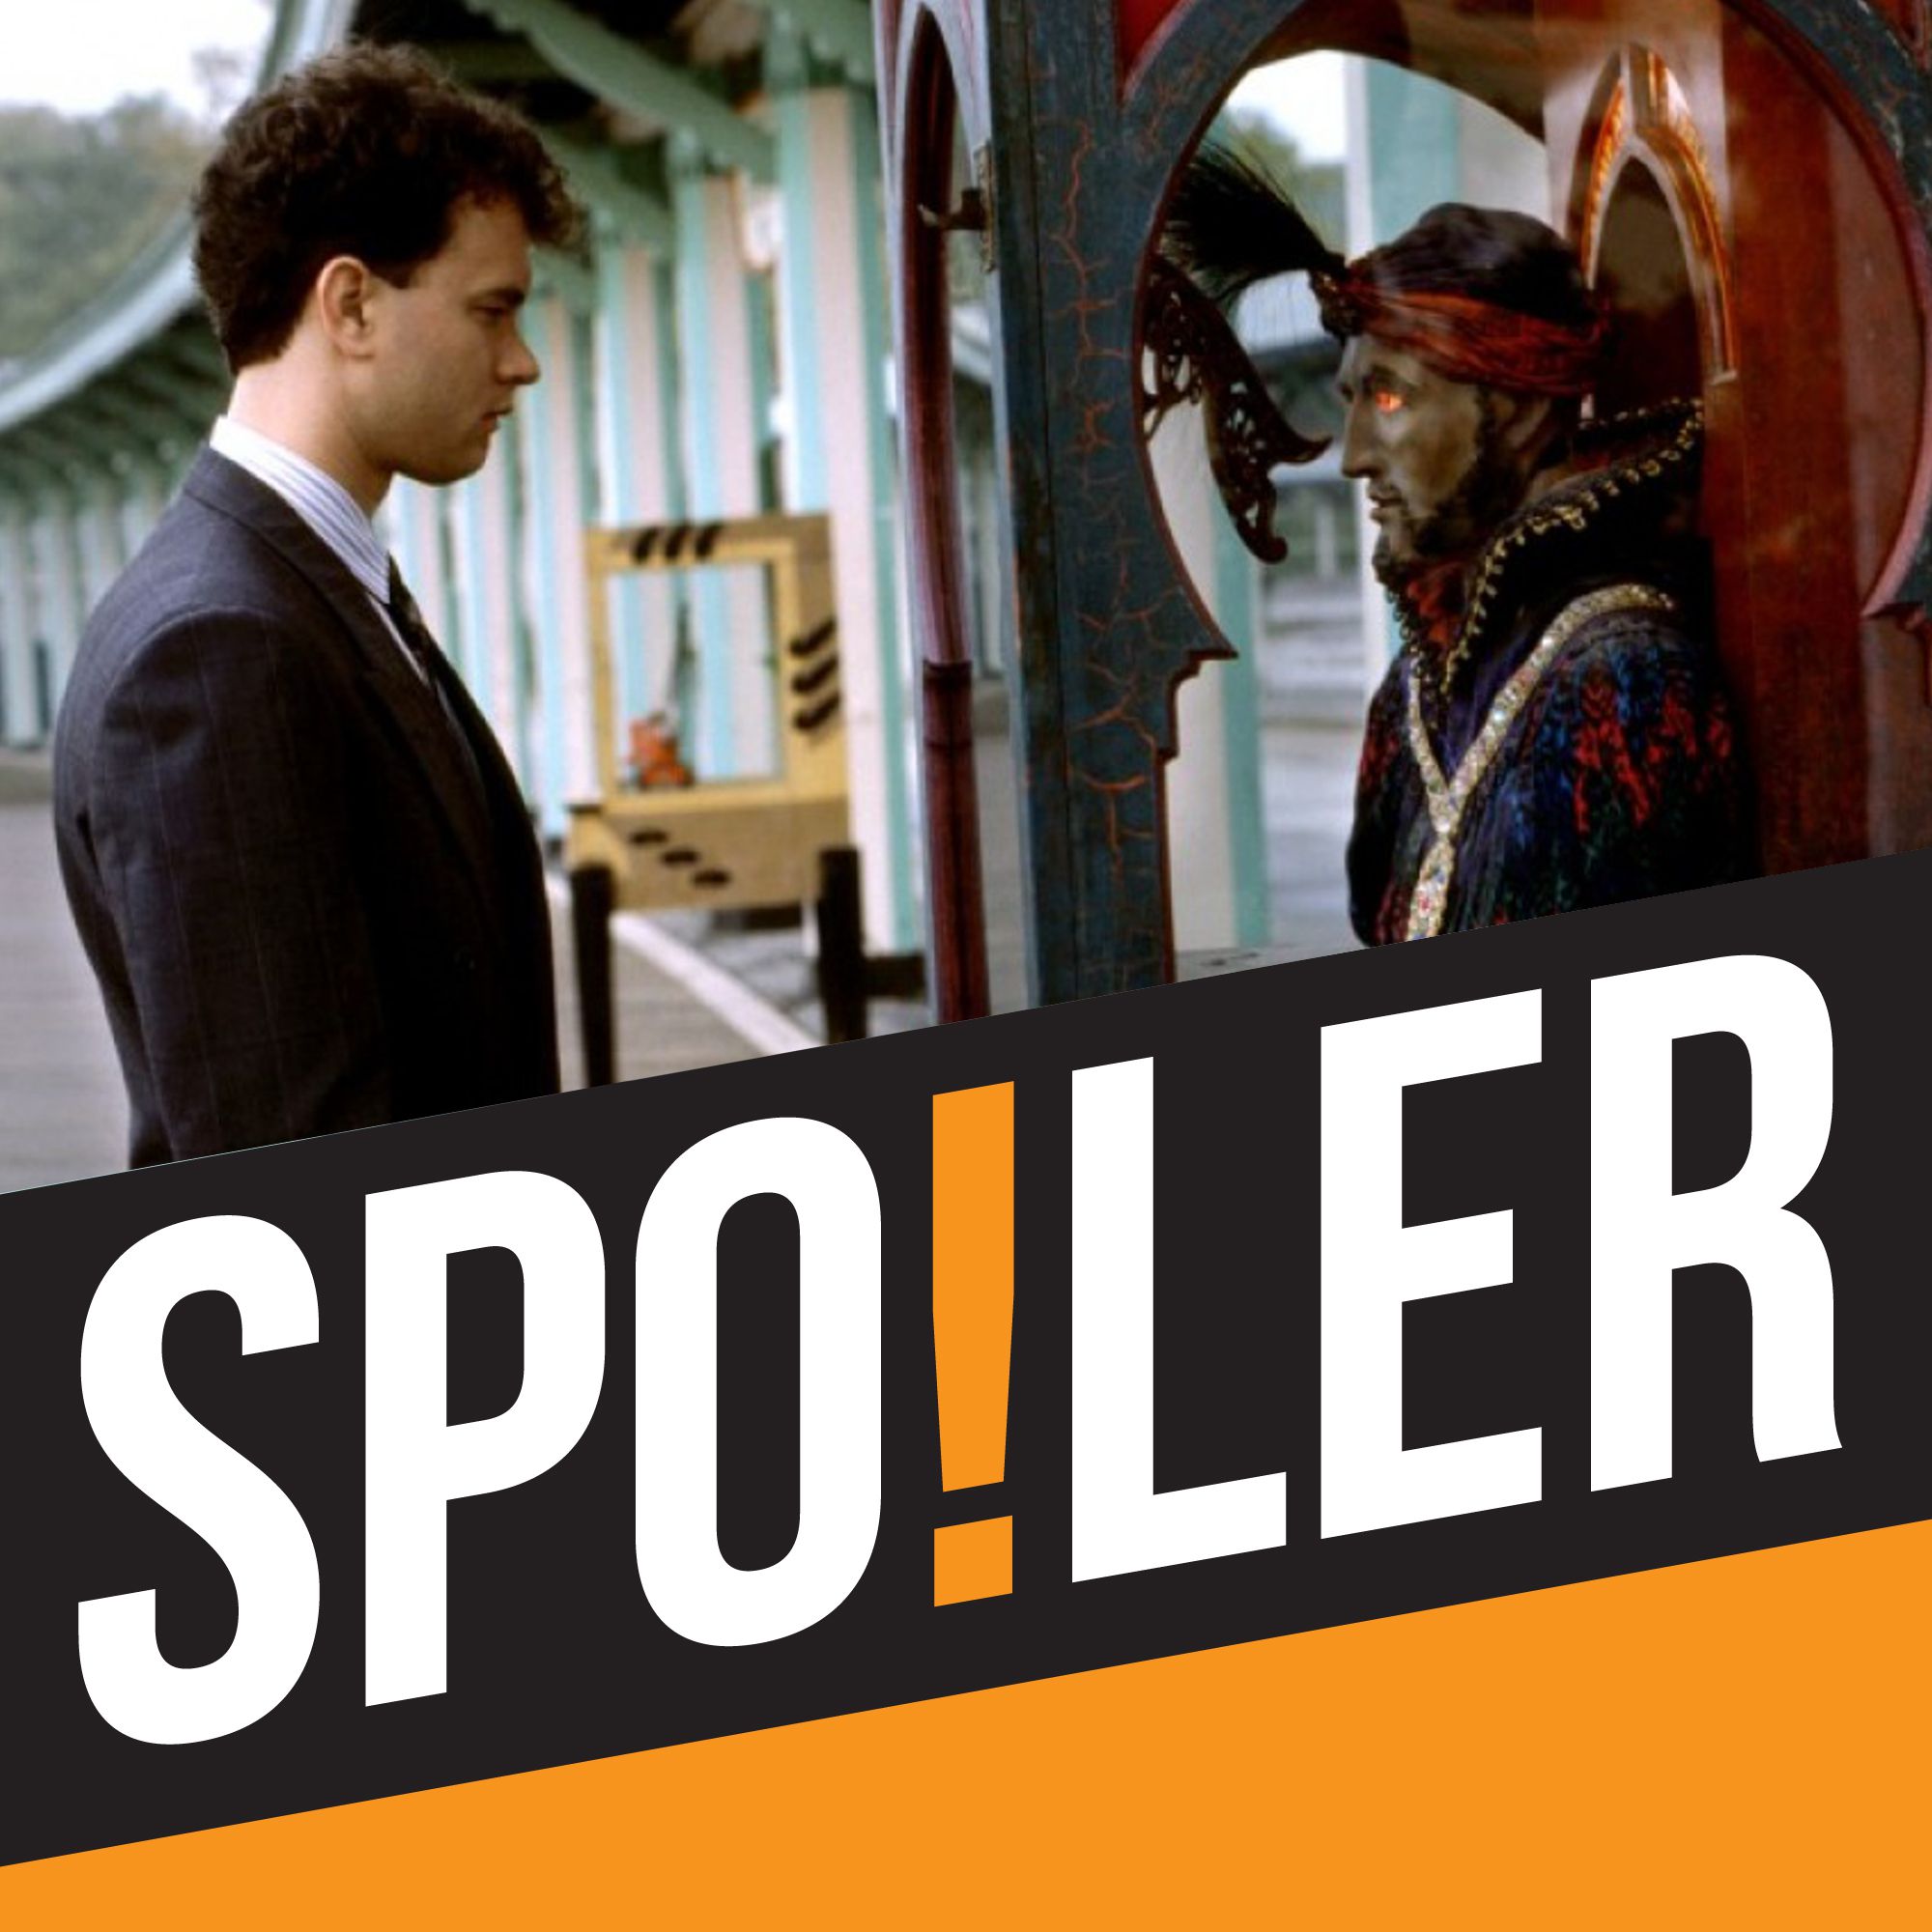 Big (1988, Tom Hanks, Elizabeth Perkins): SPOILER Episode 37